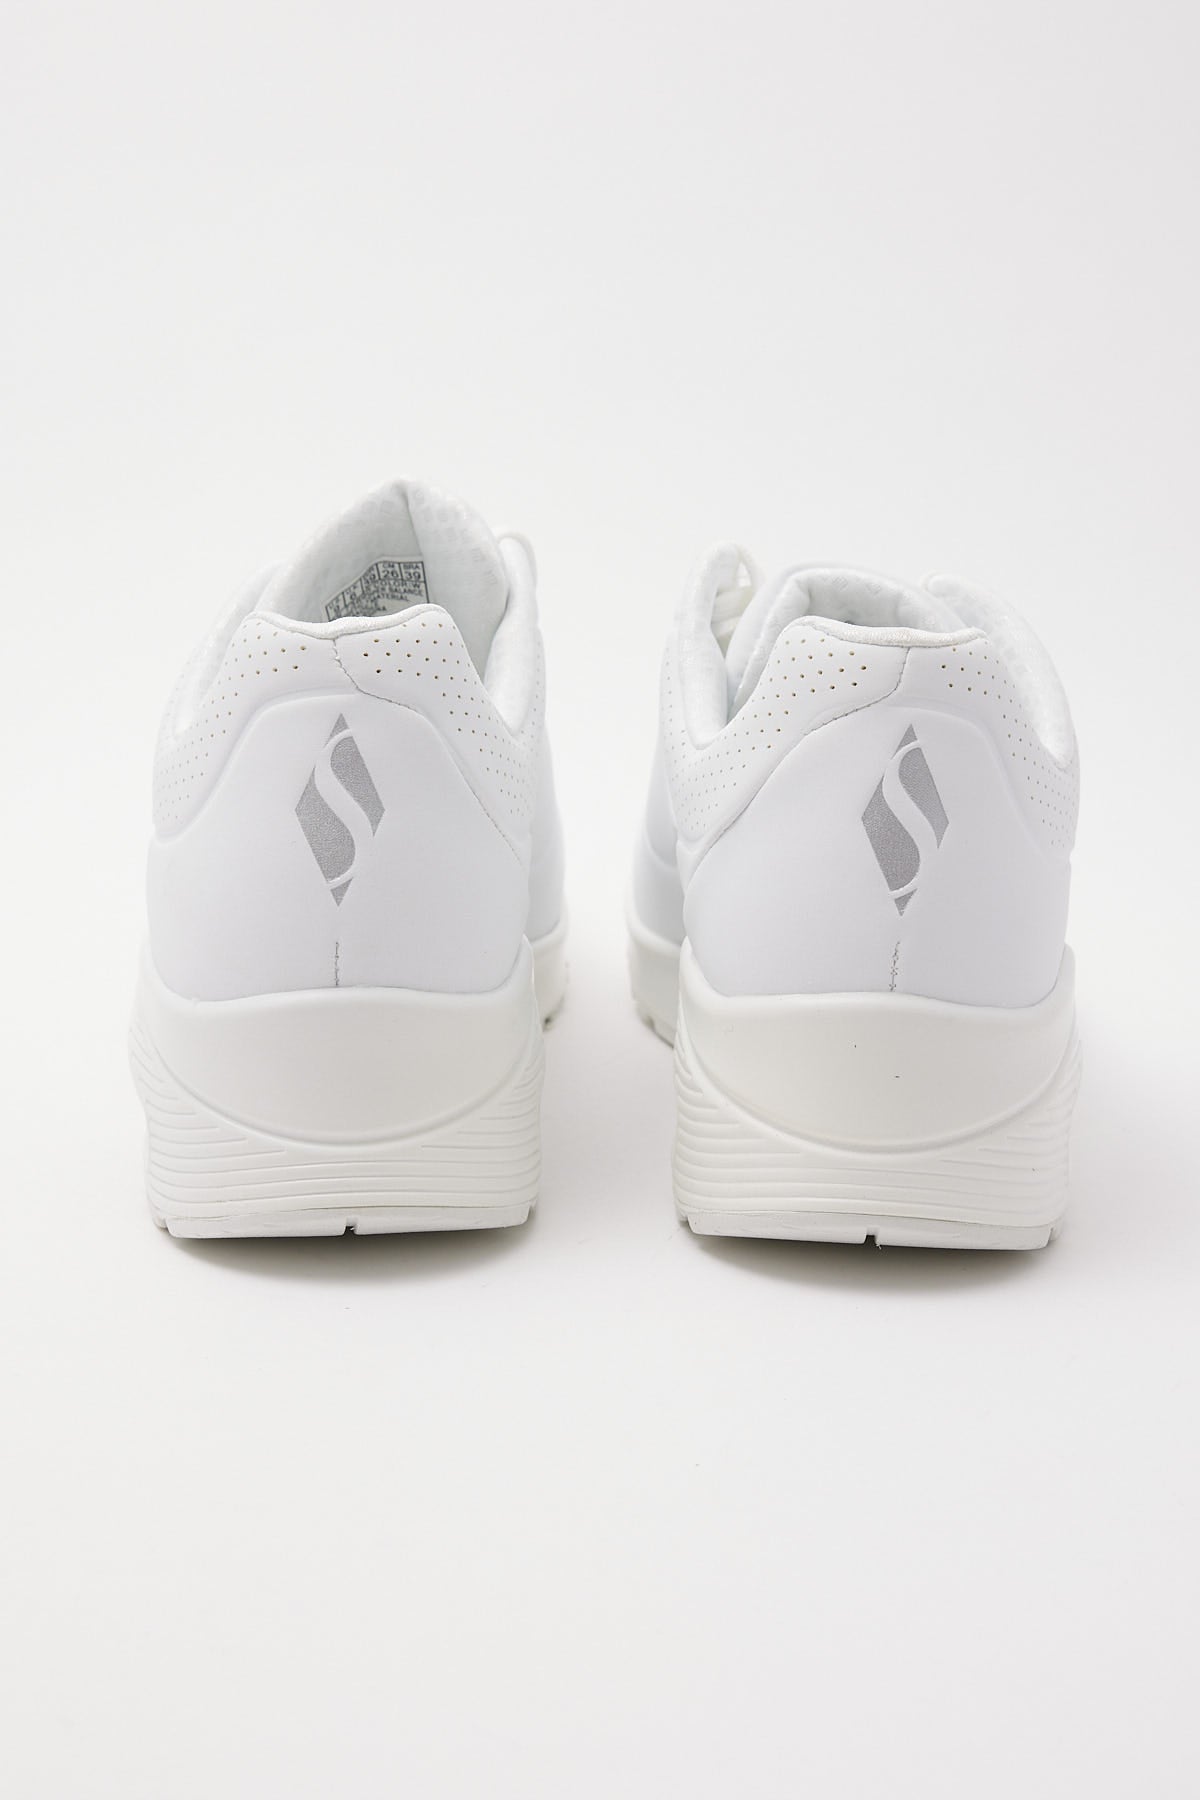 Skechers Uno White/White